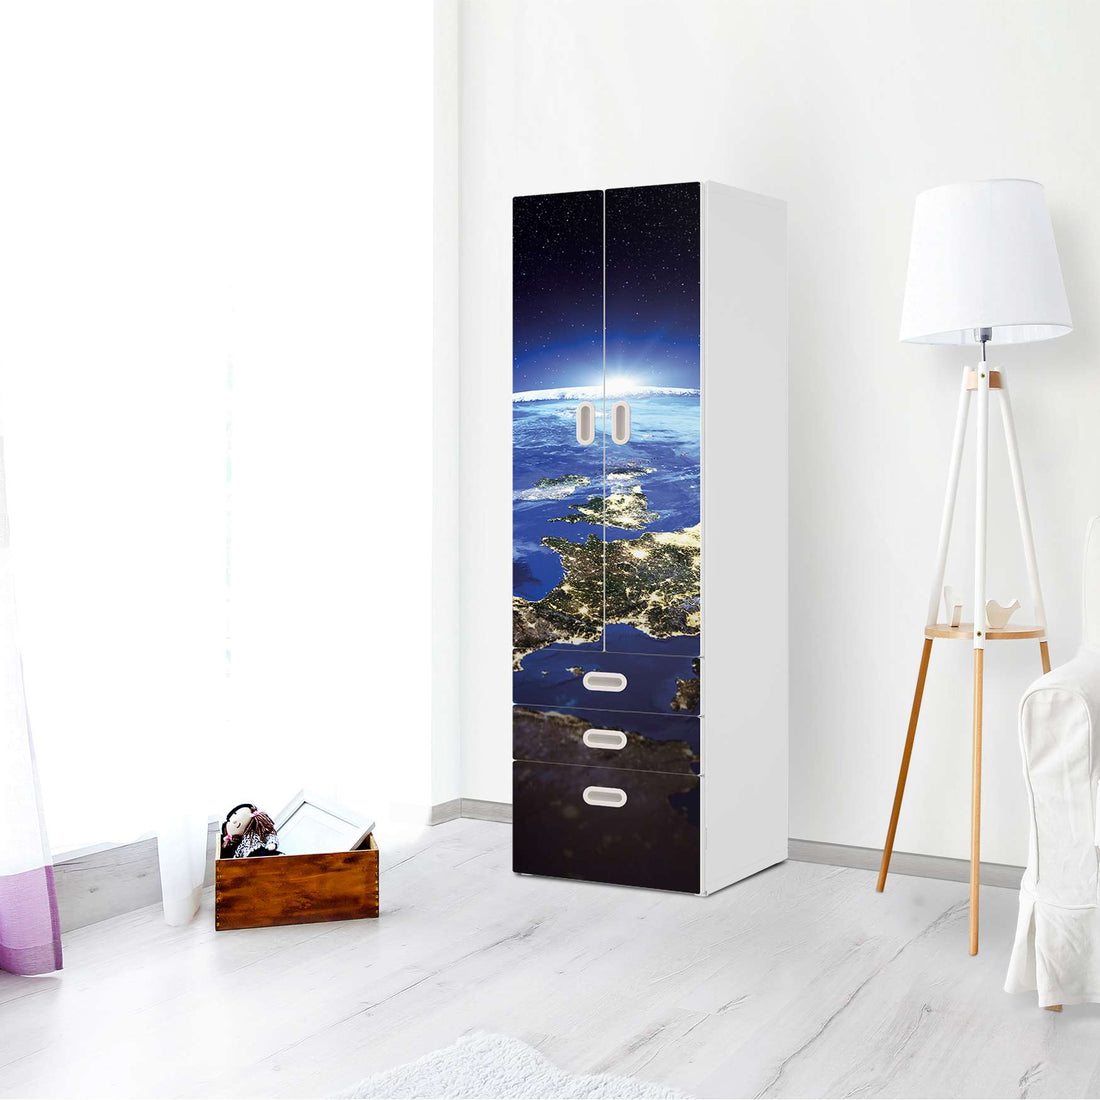 Klebefolie Earth View - IKEA Stuva / Fritids kombiniert - 3 Schubladen und 2 große Türen - Kinderzimmer